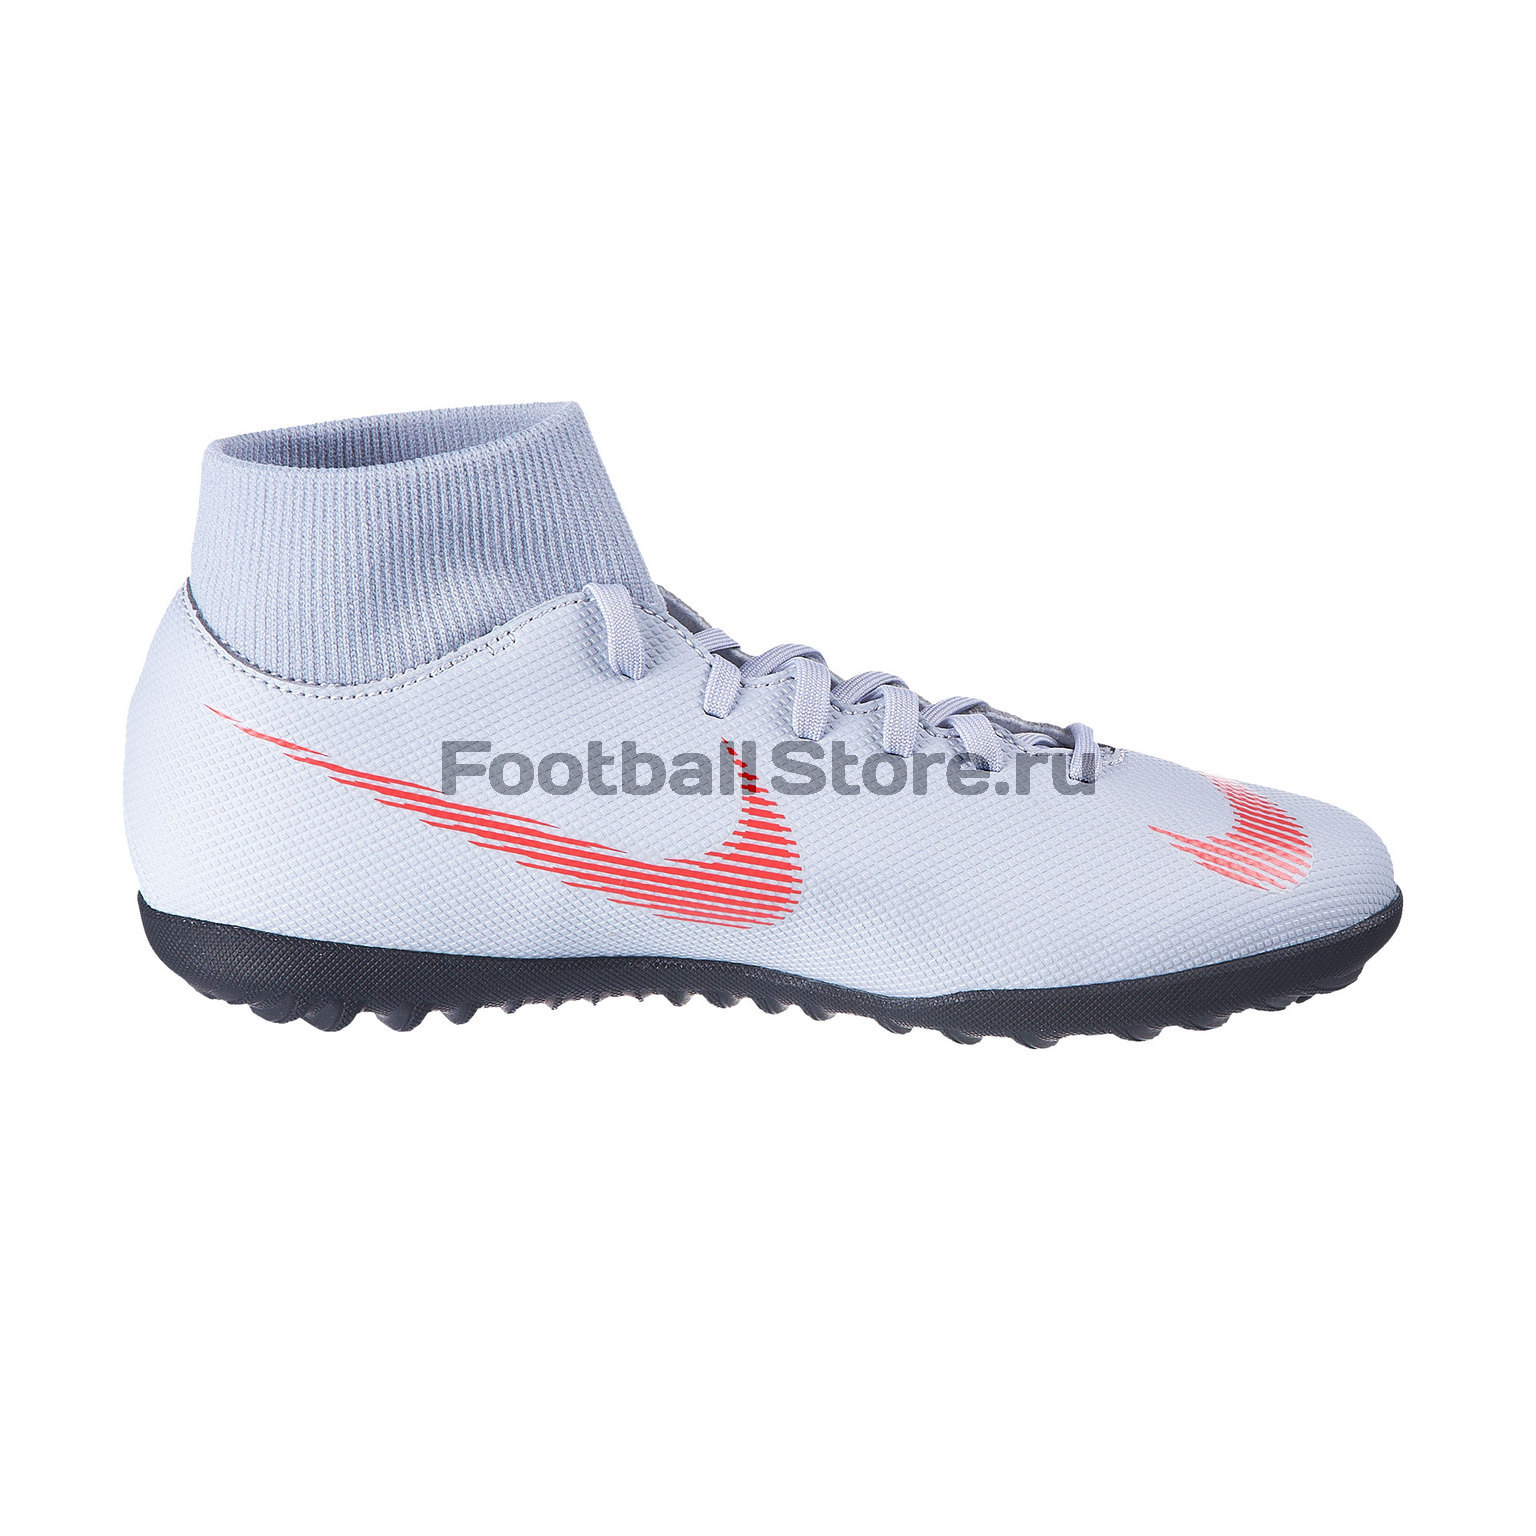 Шиповки Nike SuperflyX 6 Club TF AH7372-060